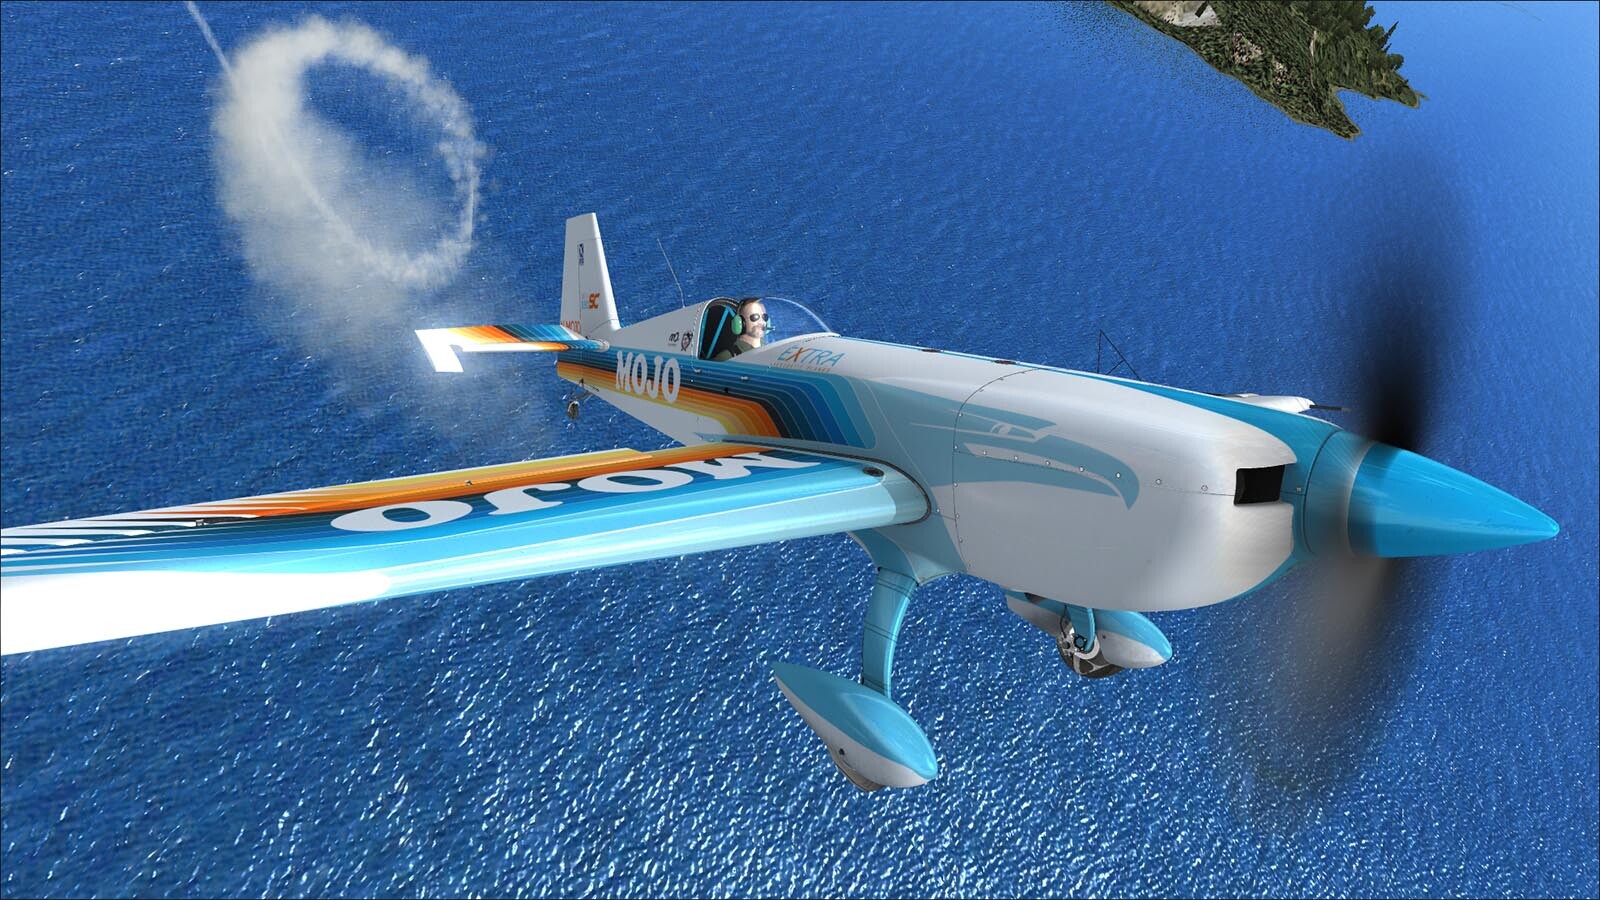 microsoft-flight-simulator-x-steam-edition-skychaser-add-on-steam-key-for-pc-buy-now